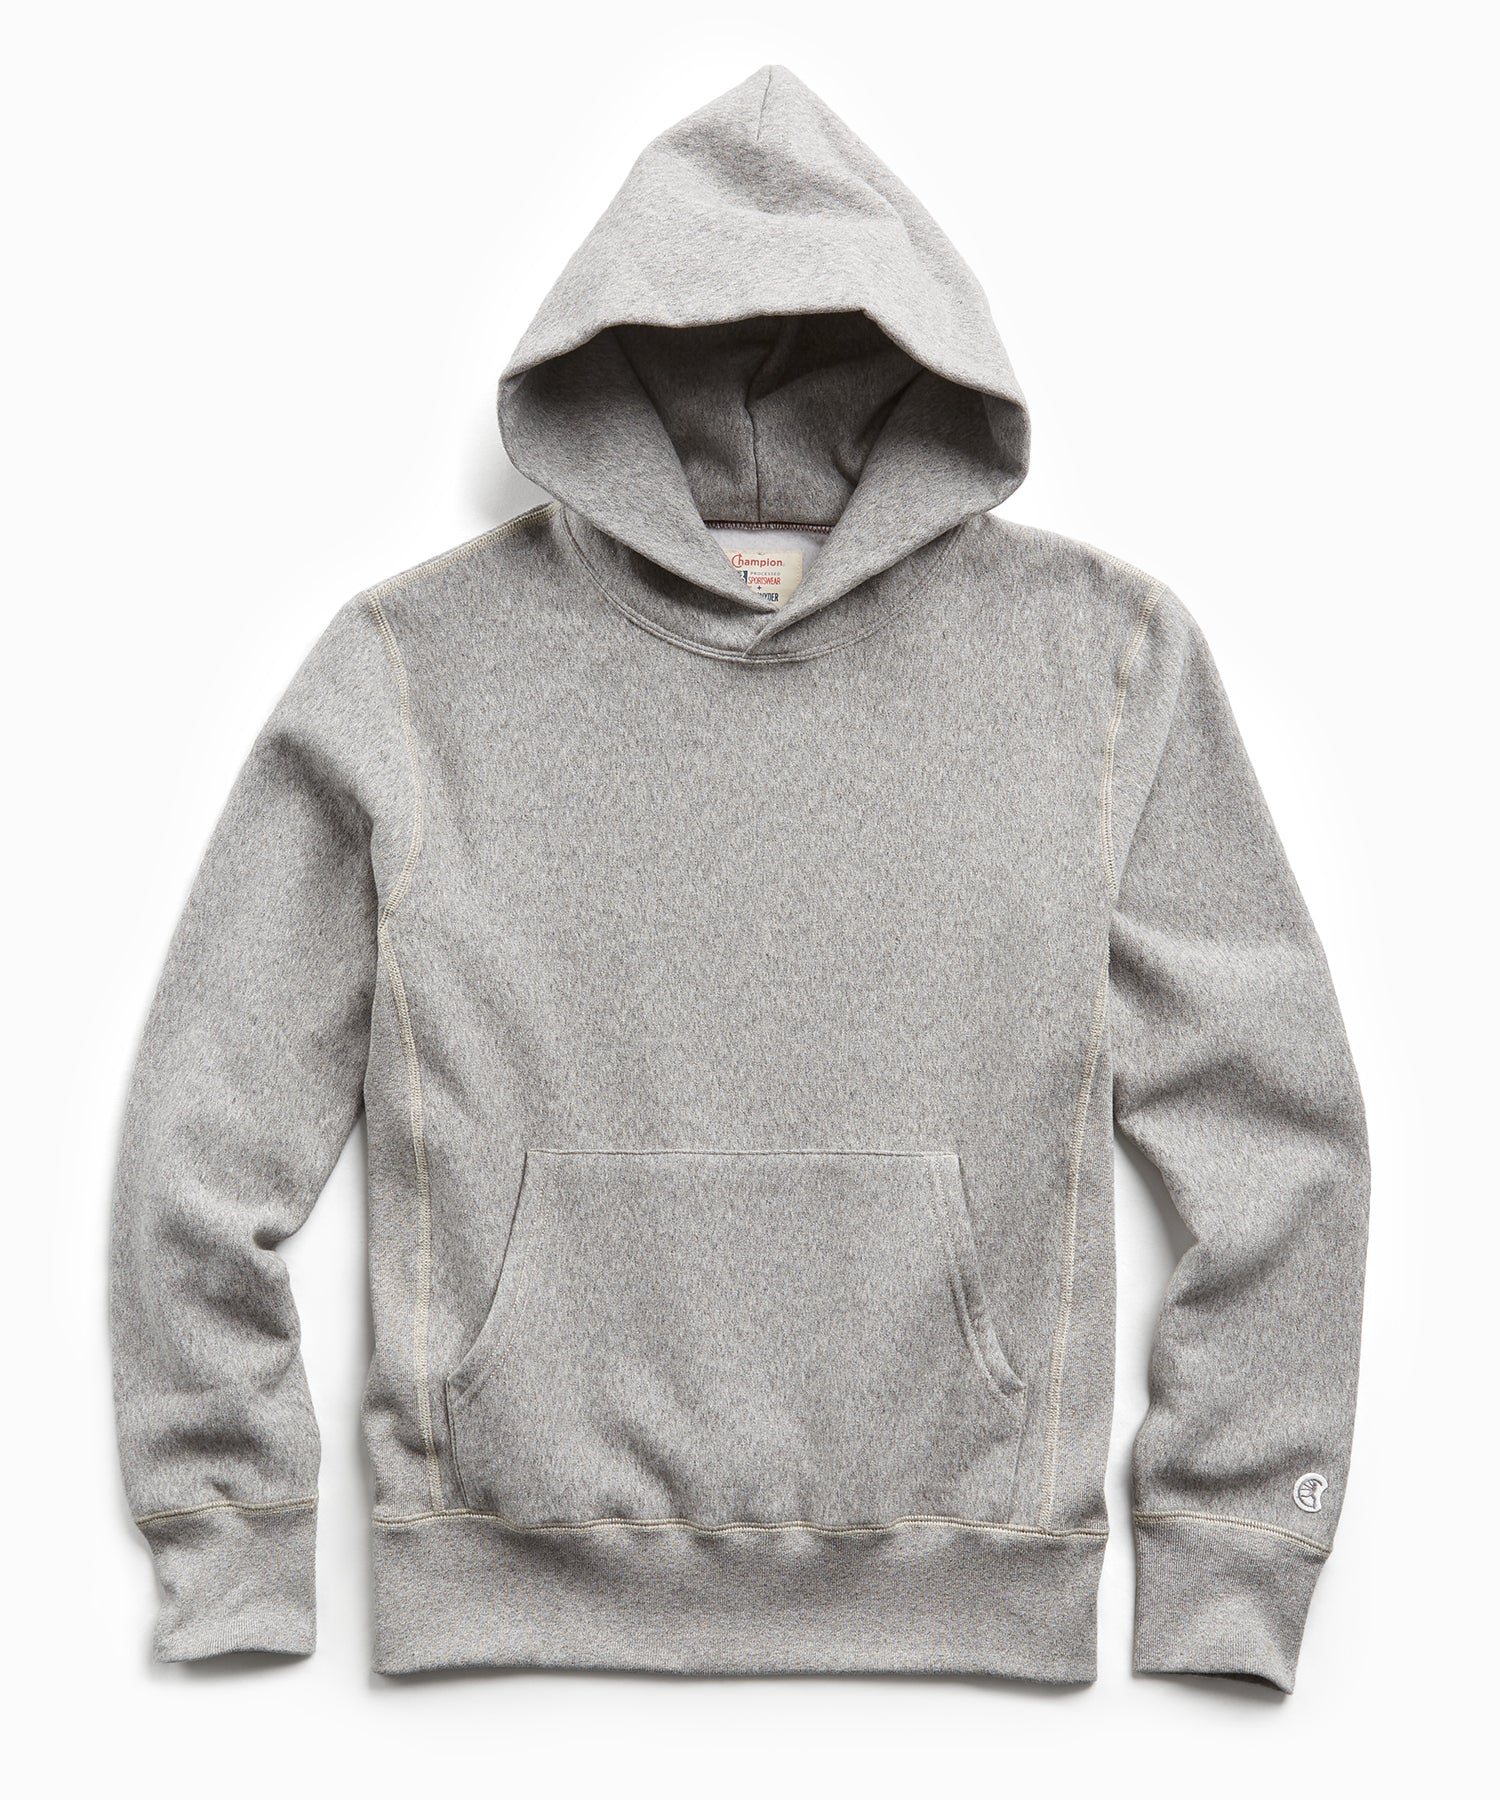 grey and white champion hoodie